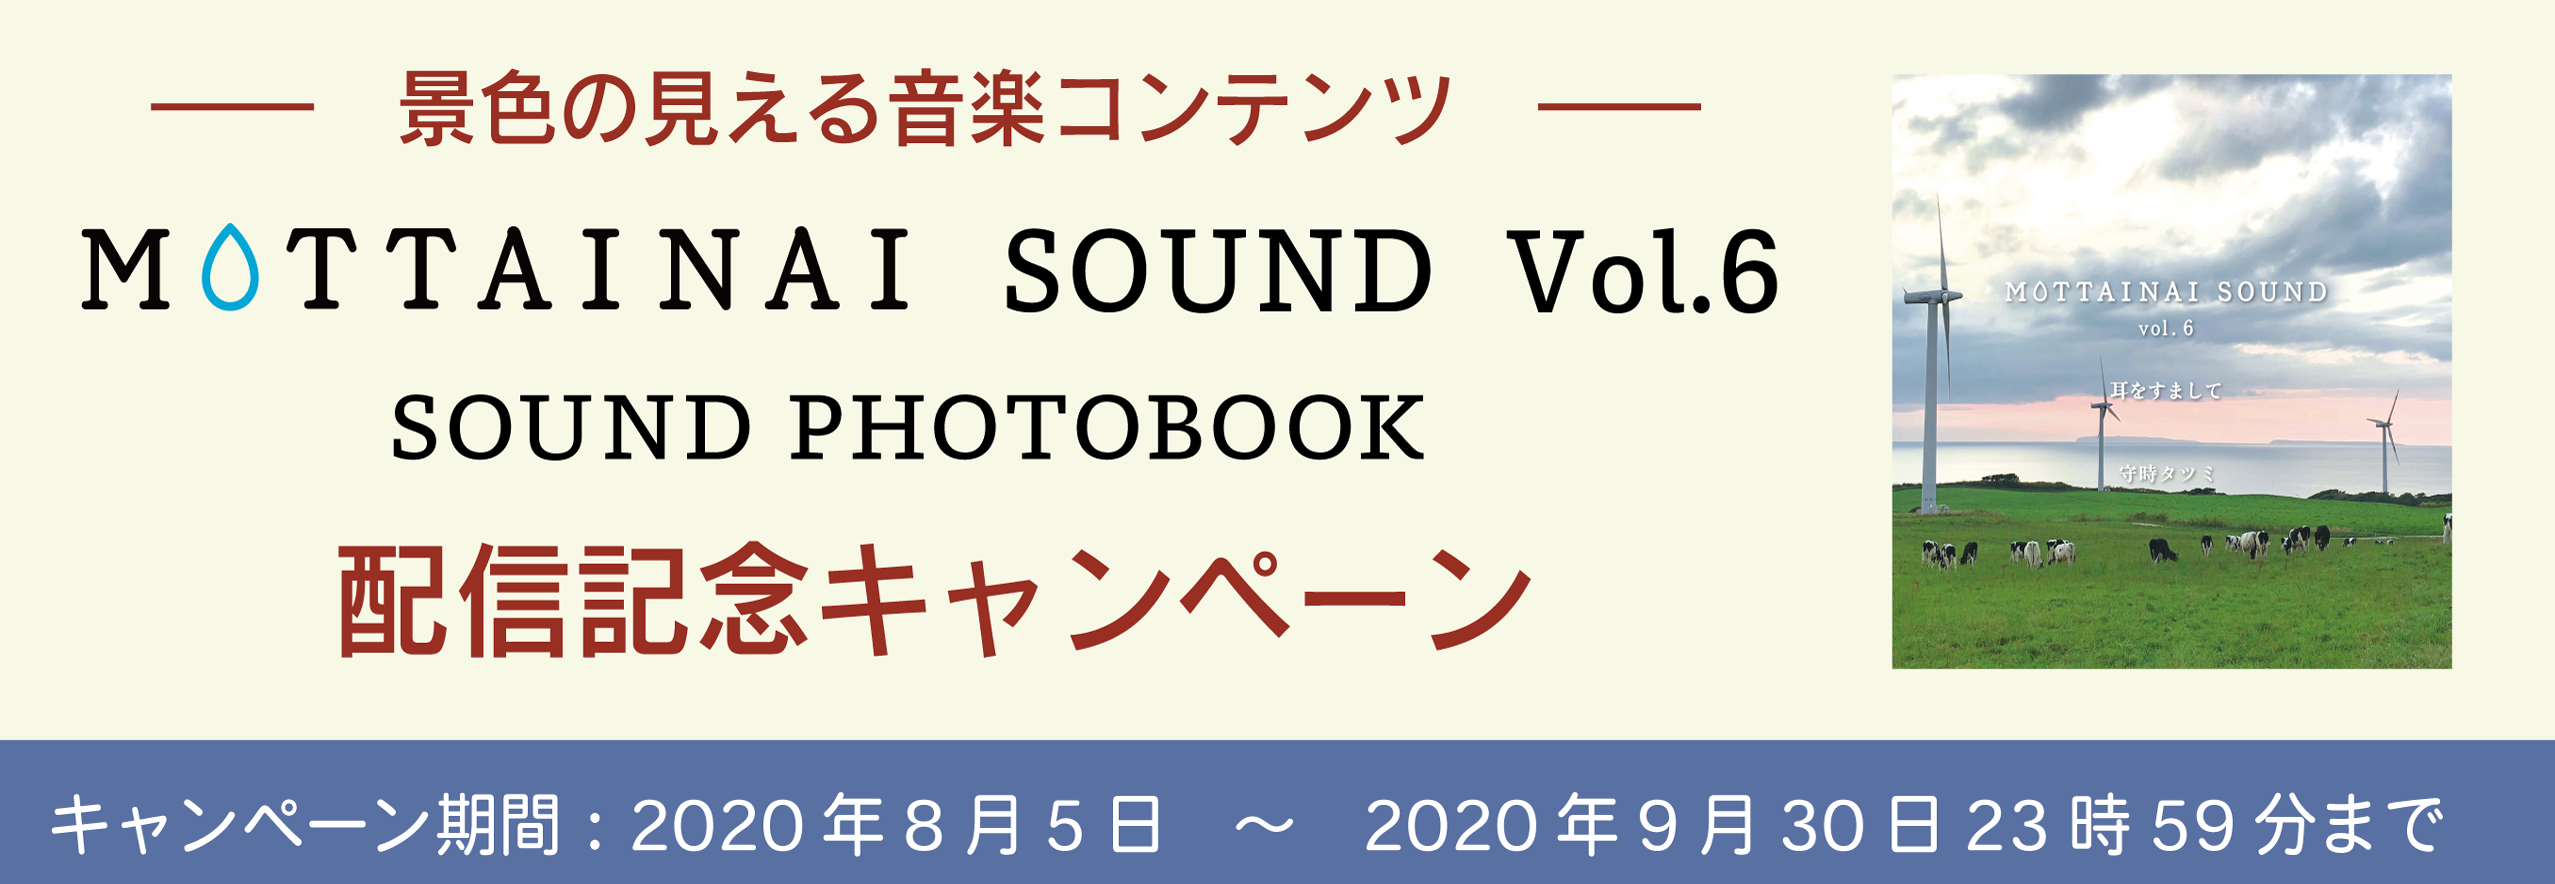 MOTTAINAI SOUND Vol.6配信記念キャンペーン